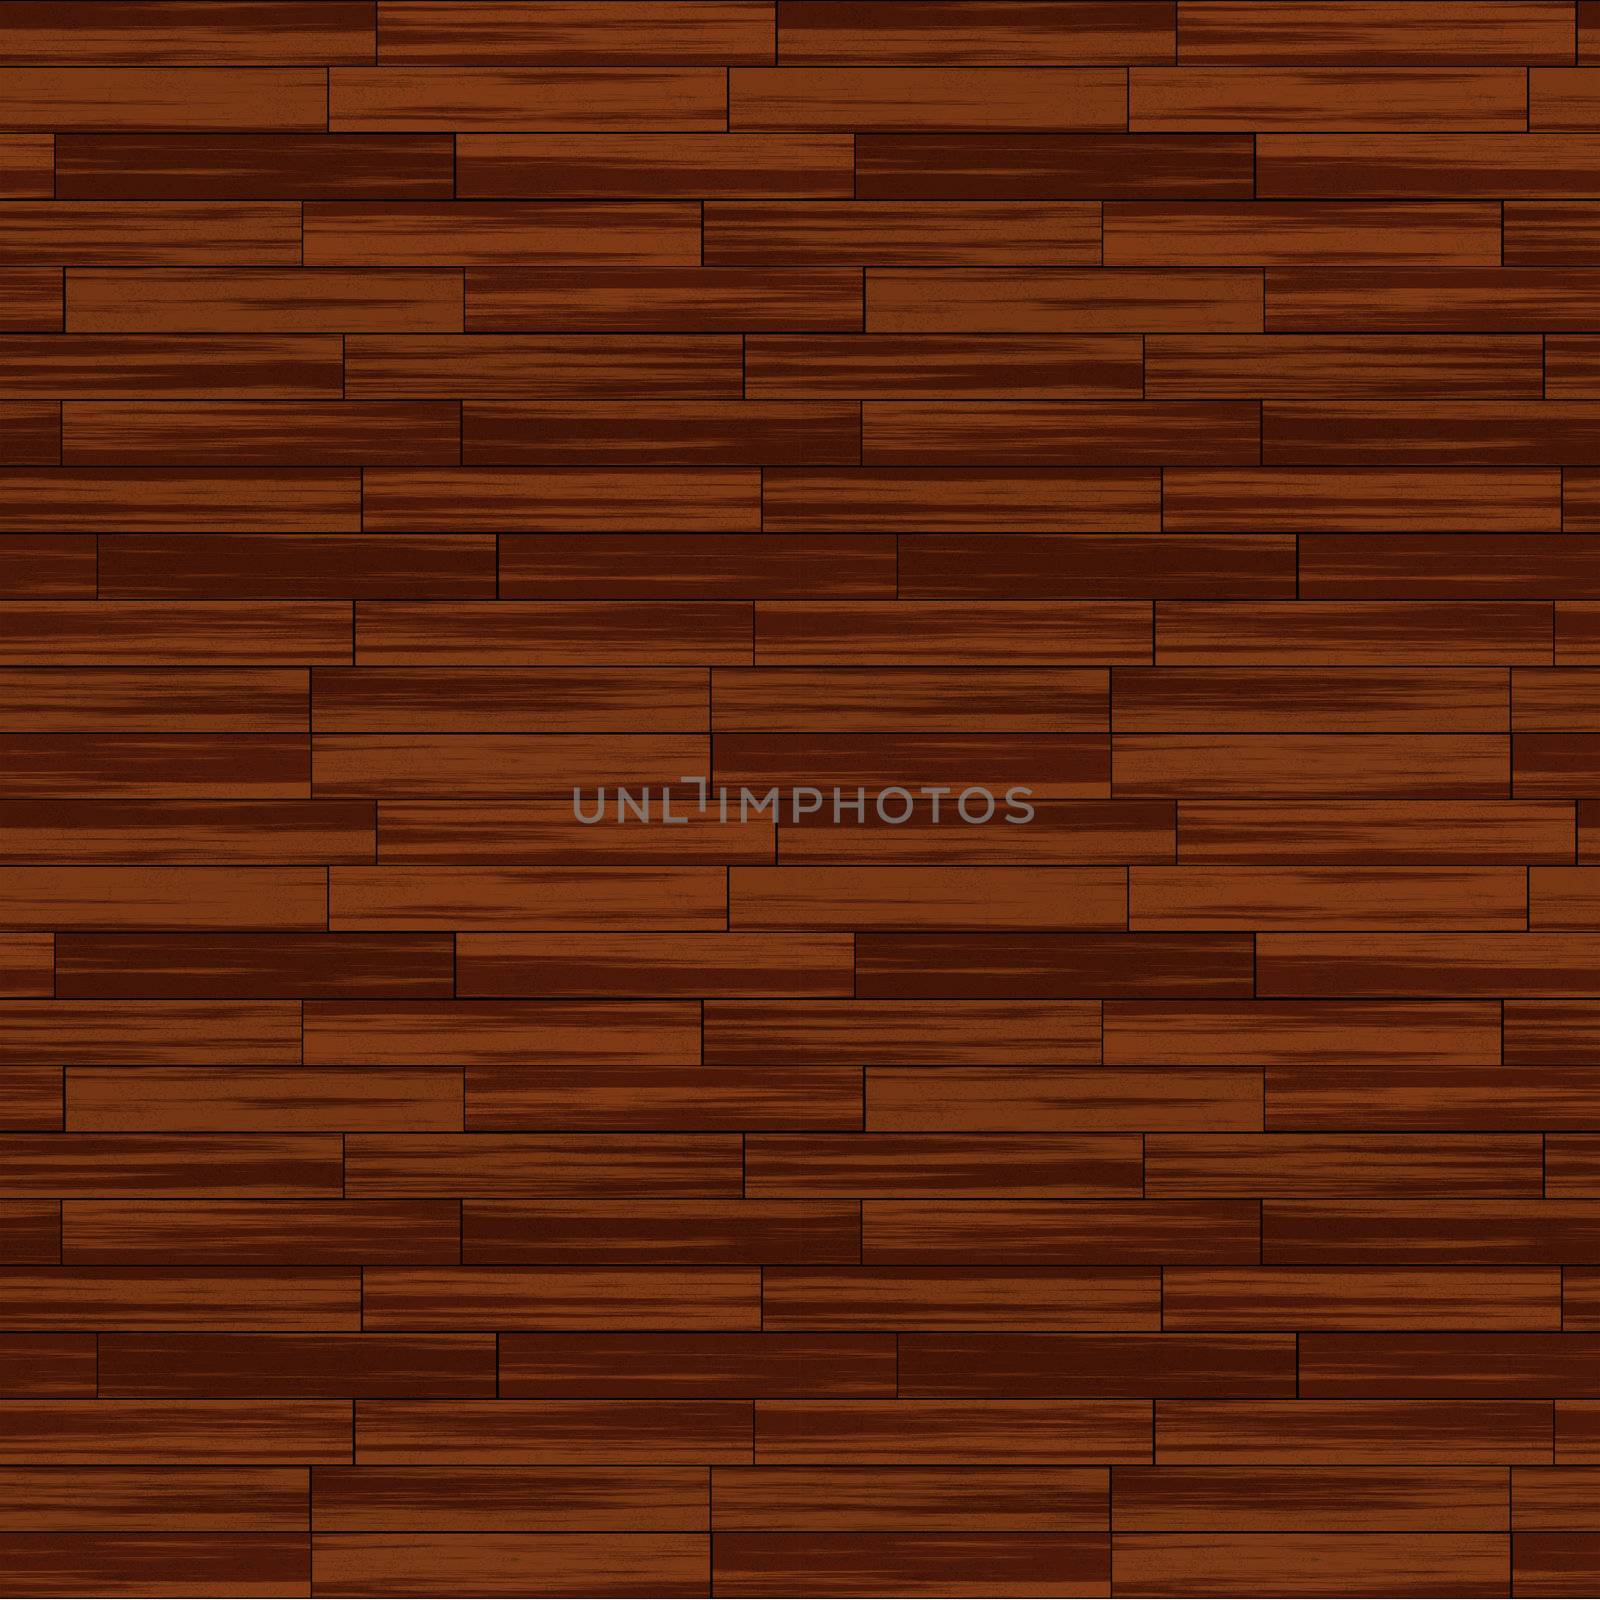 Wooden Floor Seamless Pattern - Realistic Bitmap Illustration